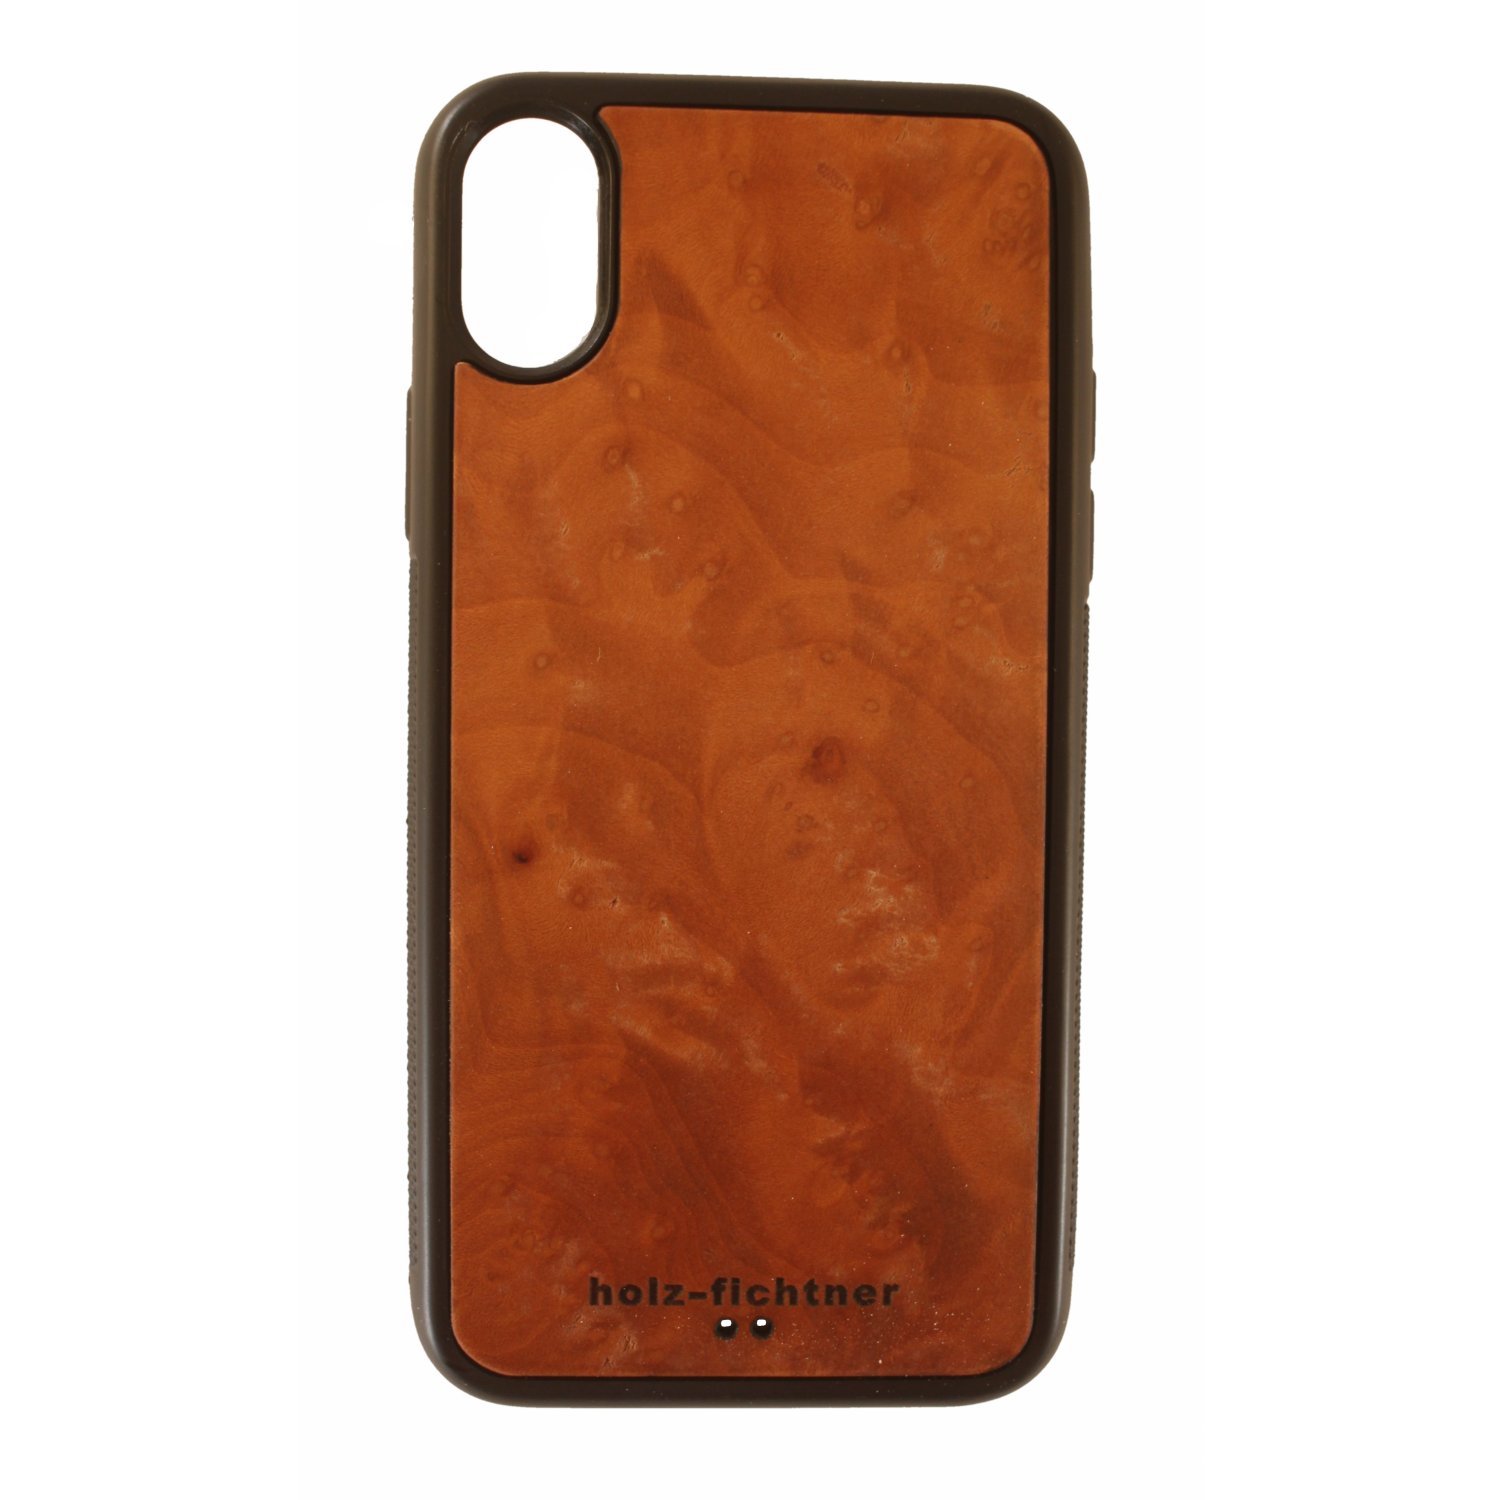 IPhone X Vavona wood cover